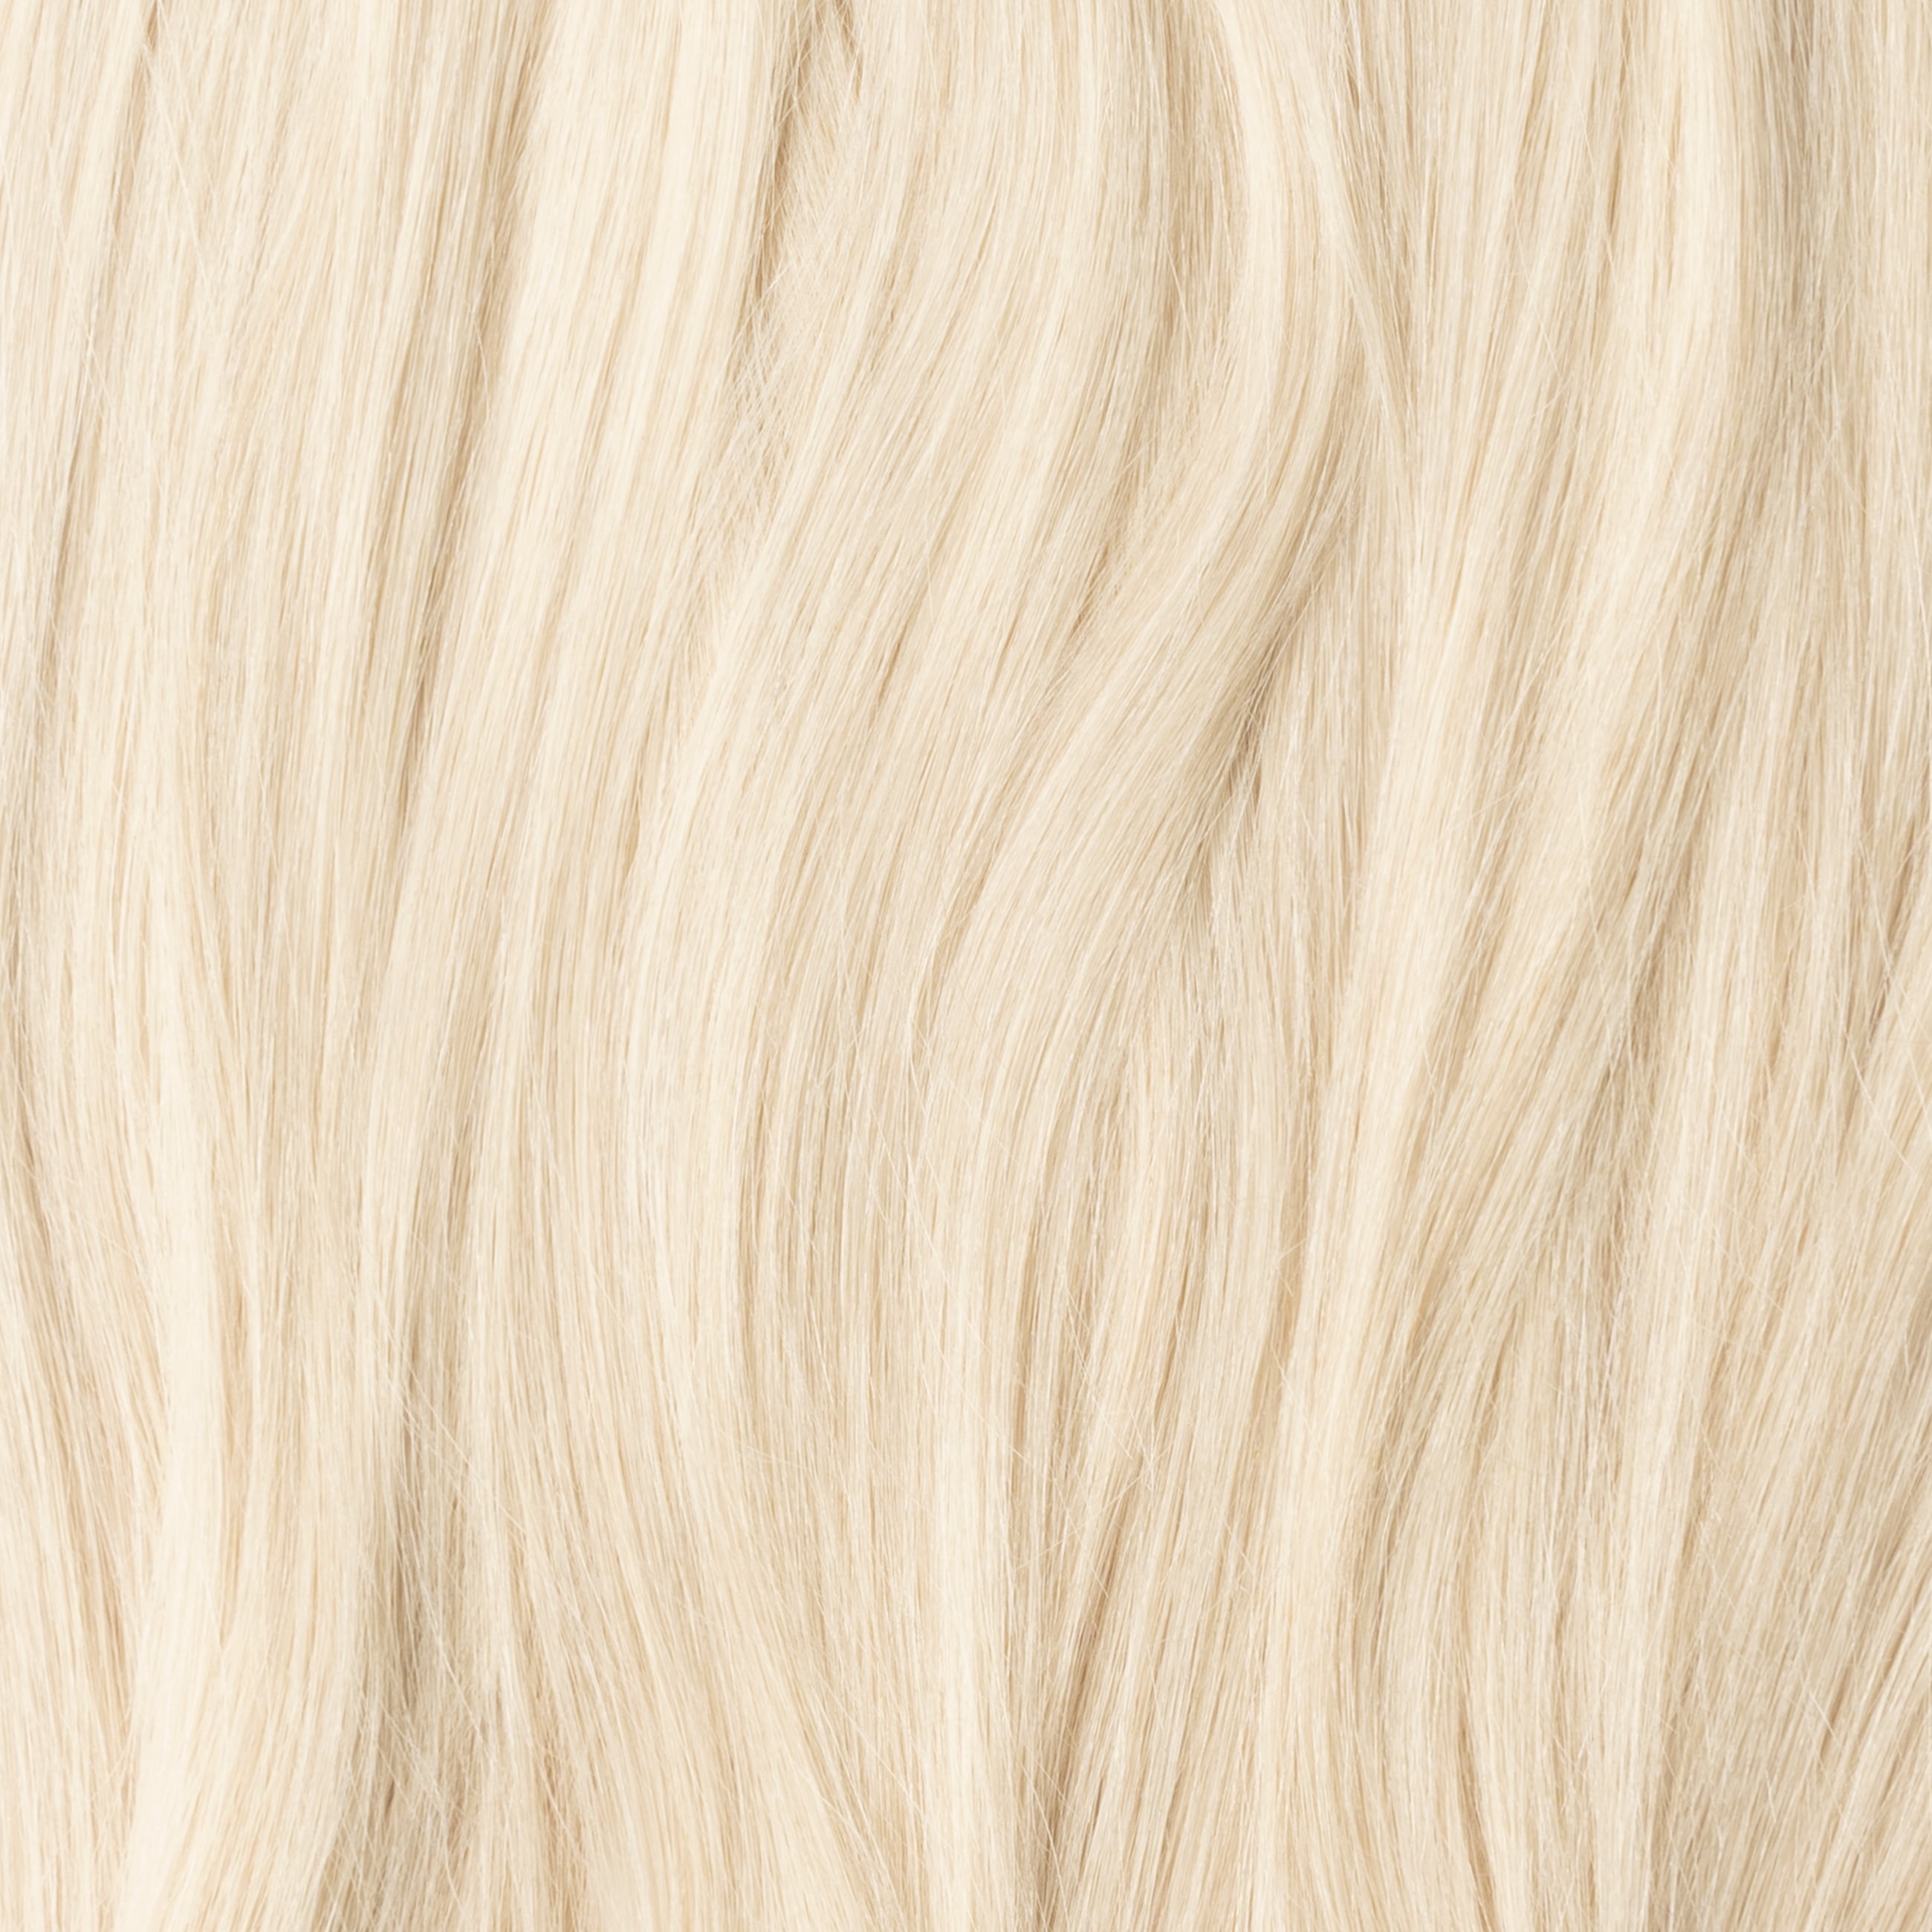 Halo hair extensions - Askblond nr. 60B